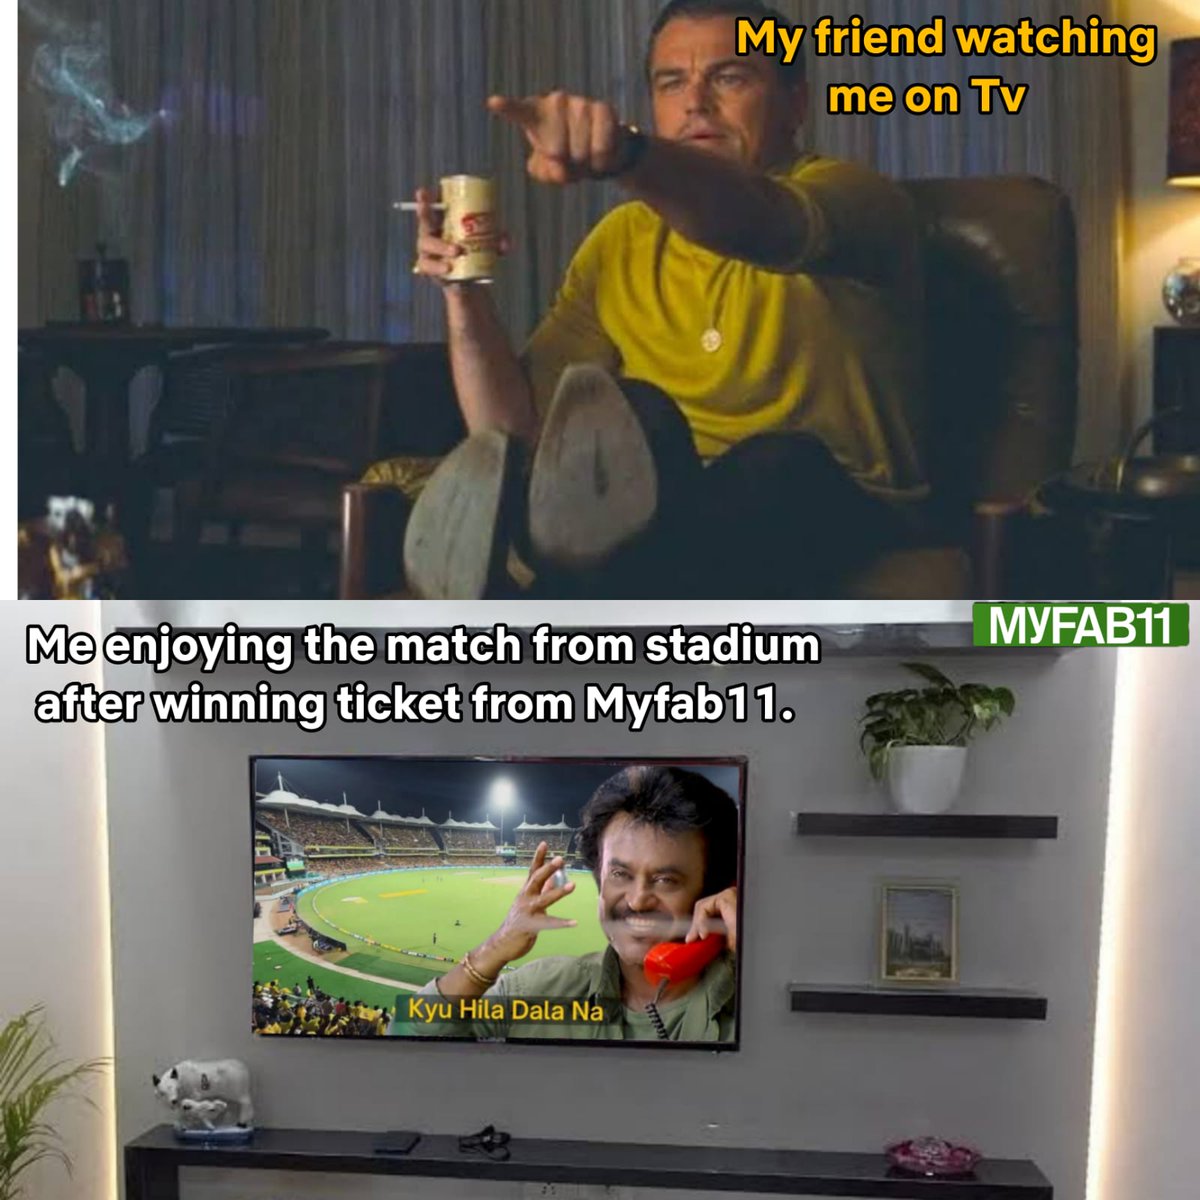 Kaash maine Myfab11 pehle download karliya hota toh aaj free tickets se live match dekhta.
#cricketmatlabMyfab11